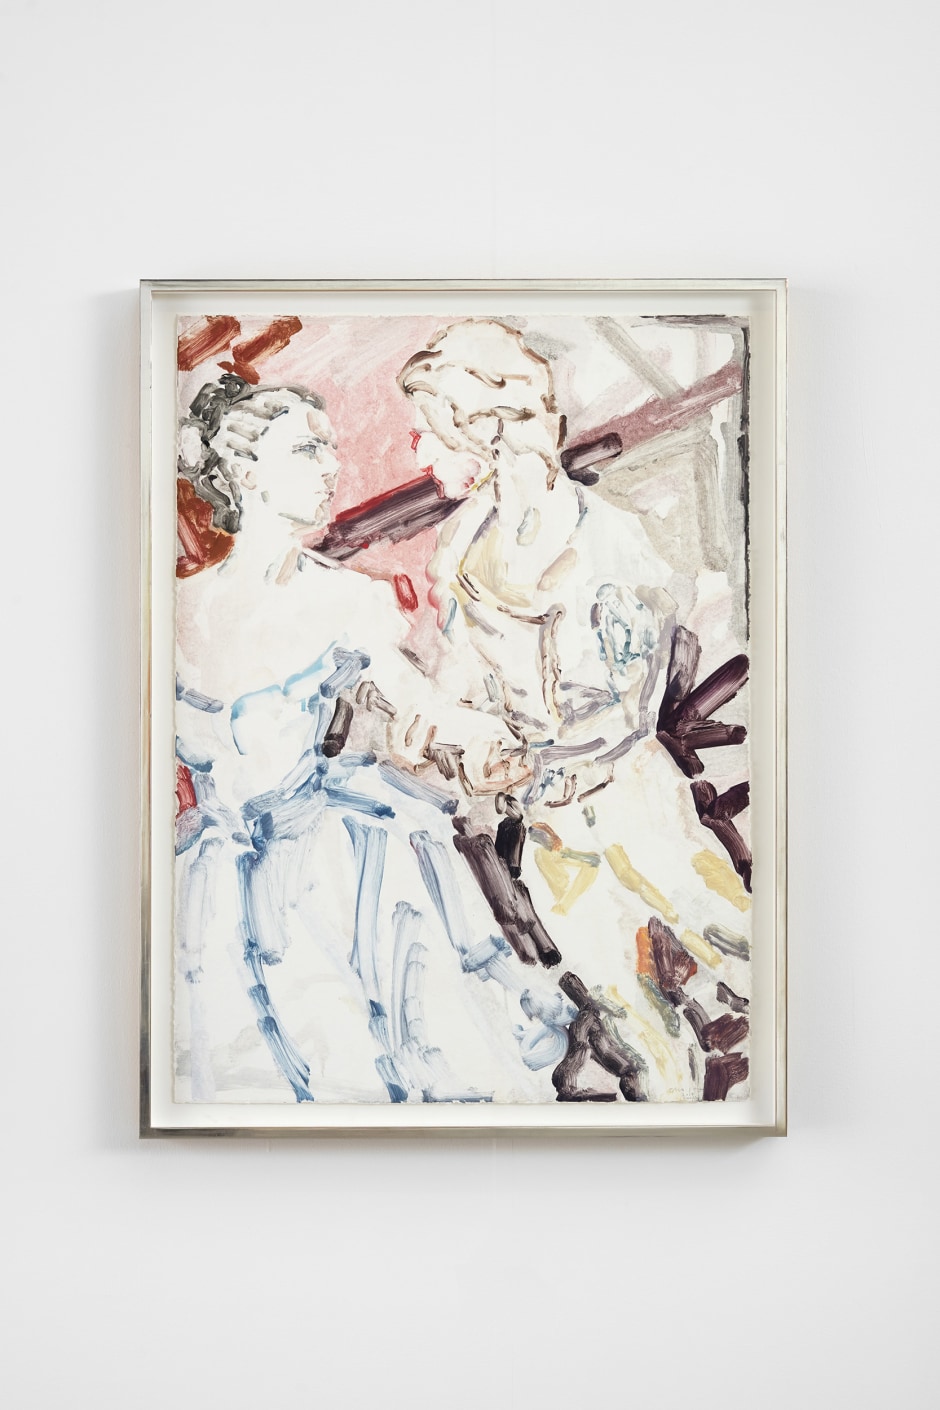 La Bayadère, Sergei and Svetlana #2, 2017  monotype on twinrocker handmade paper  site size: 128 x 94.4 cm frame size: 138.6 x 104.4 x 6.3 cm